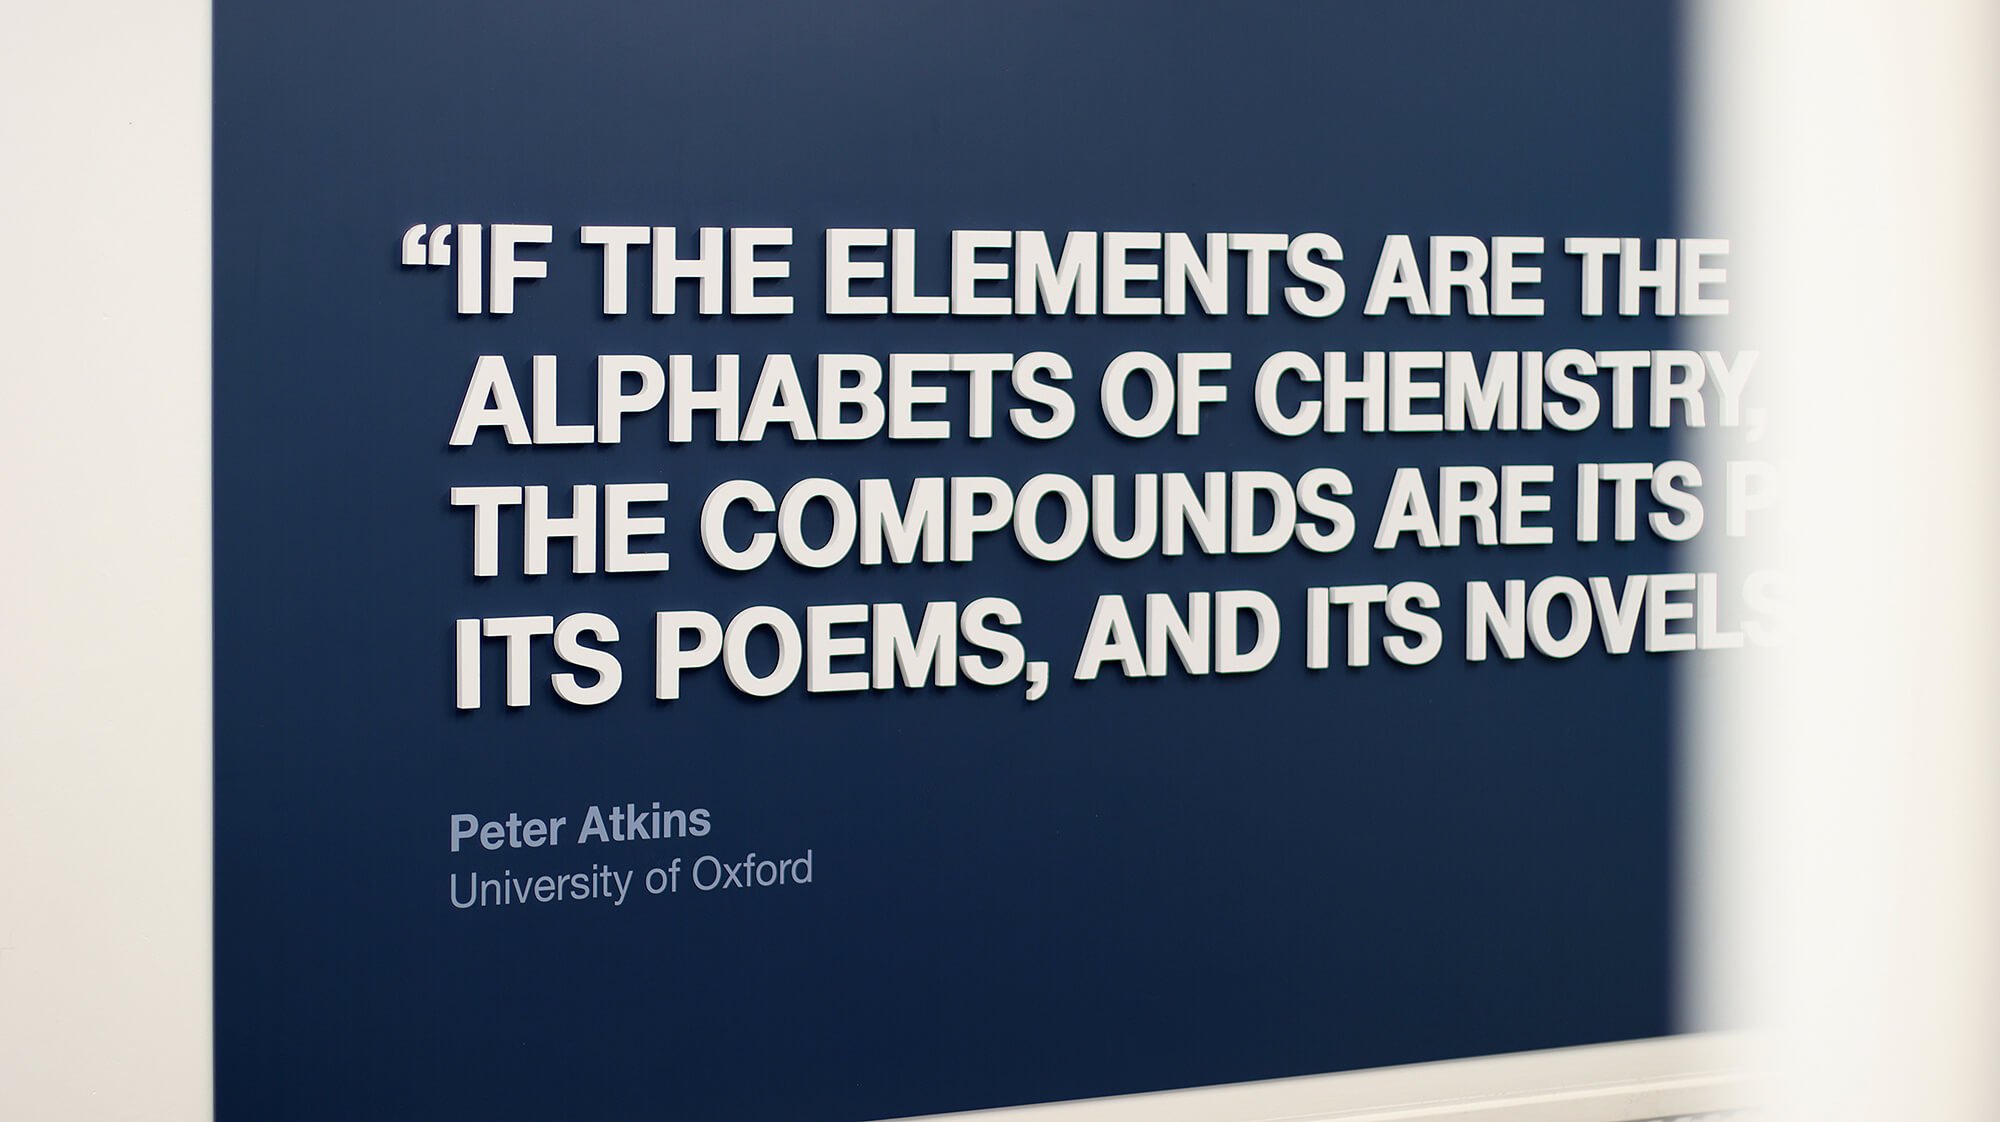 Reeds School Science Quote Wall Display 02.jpg